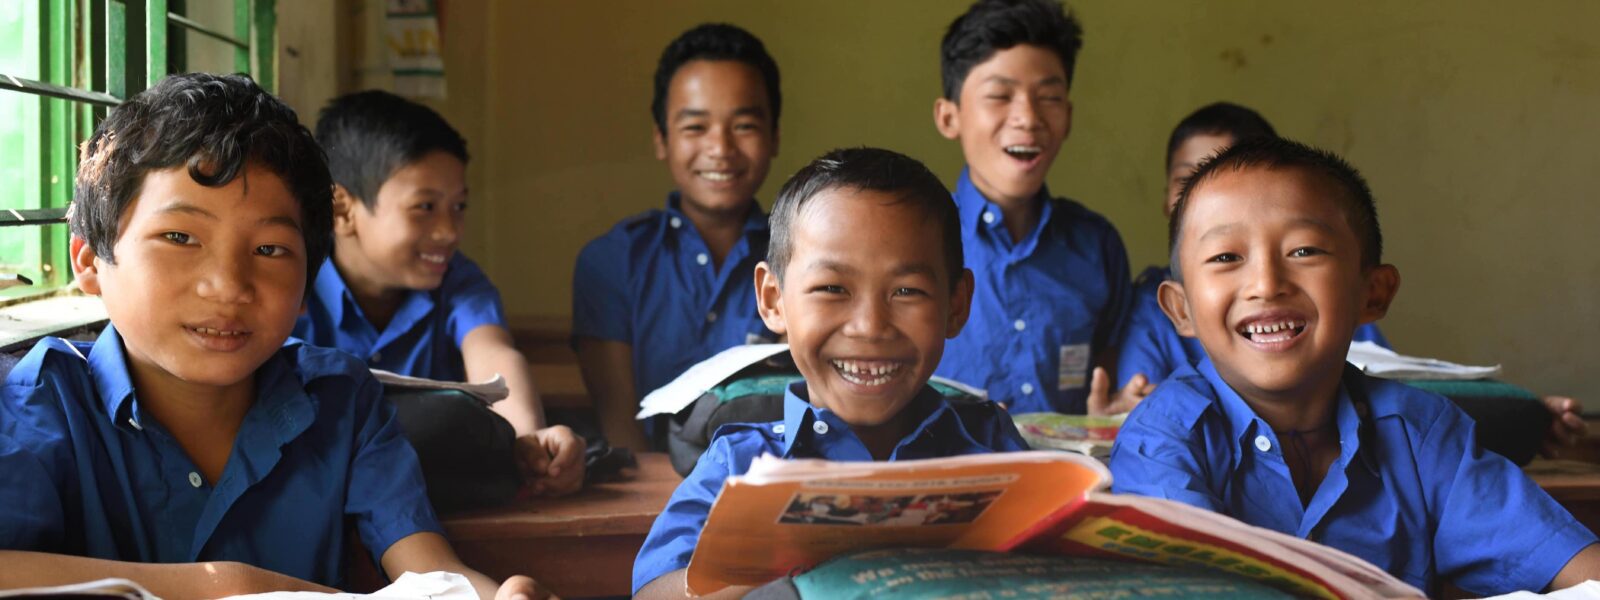 Children Smiling in Classroom in Bangladesh